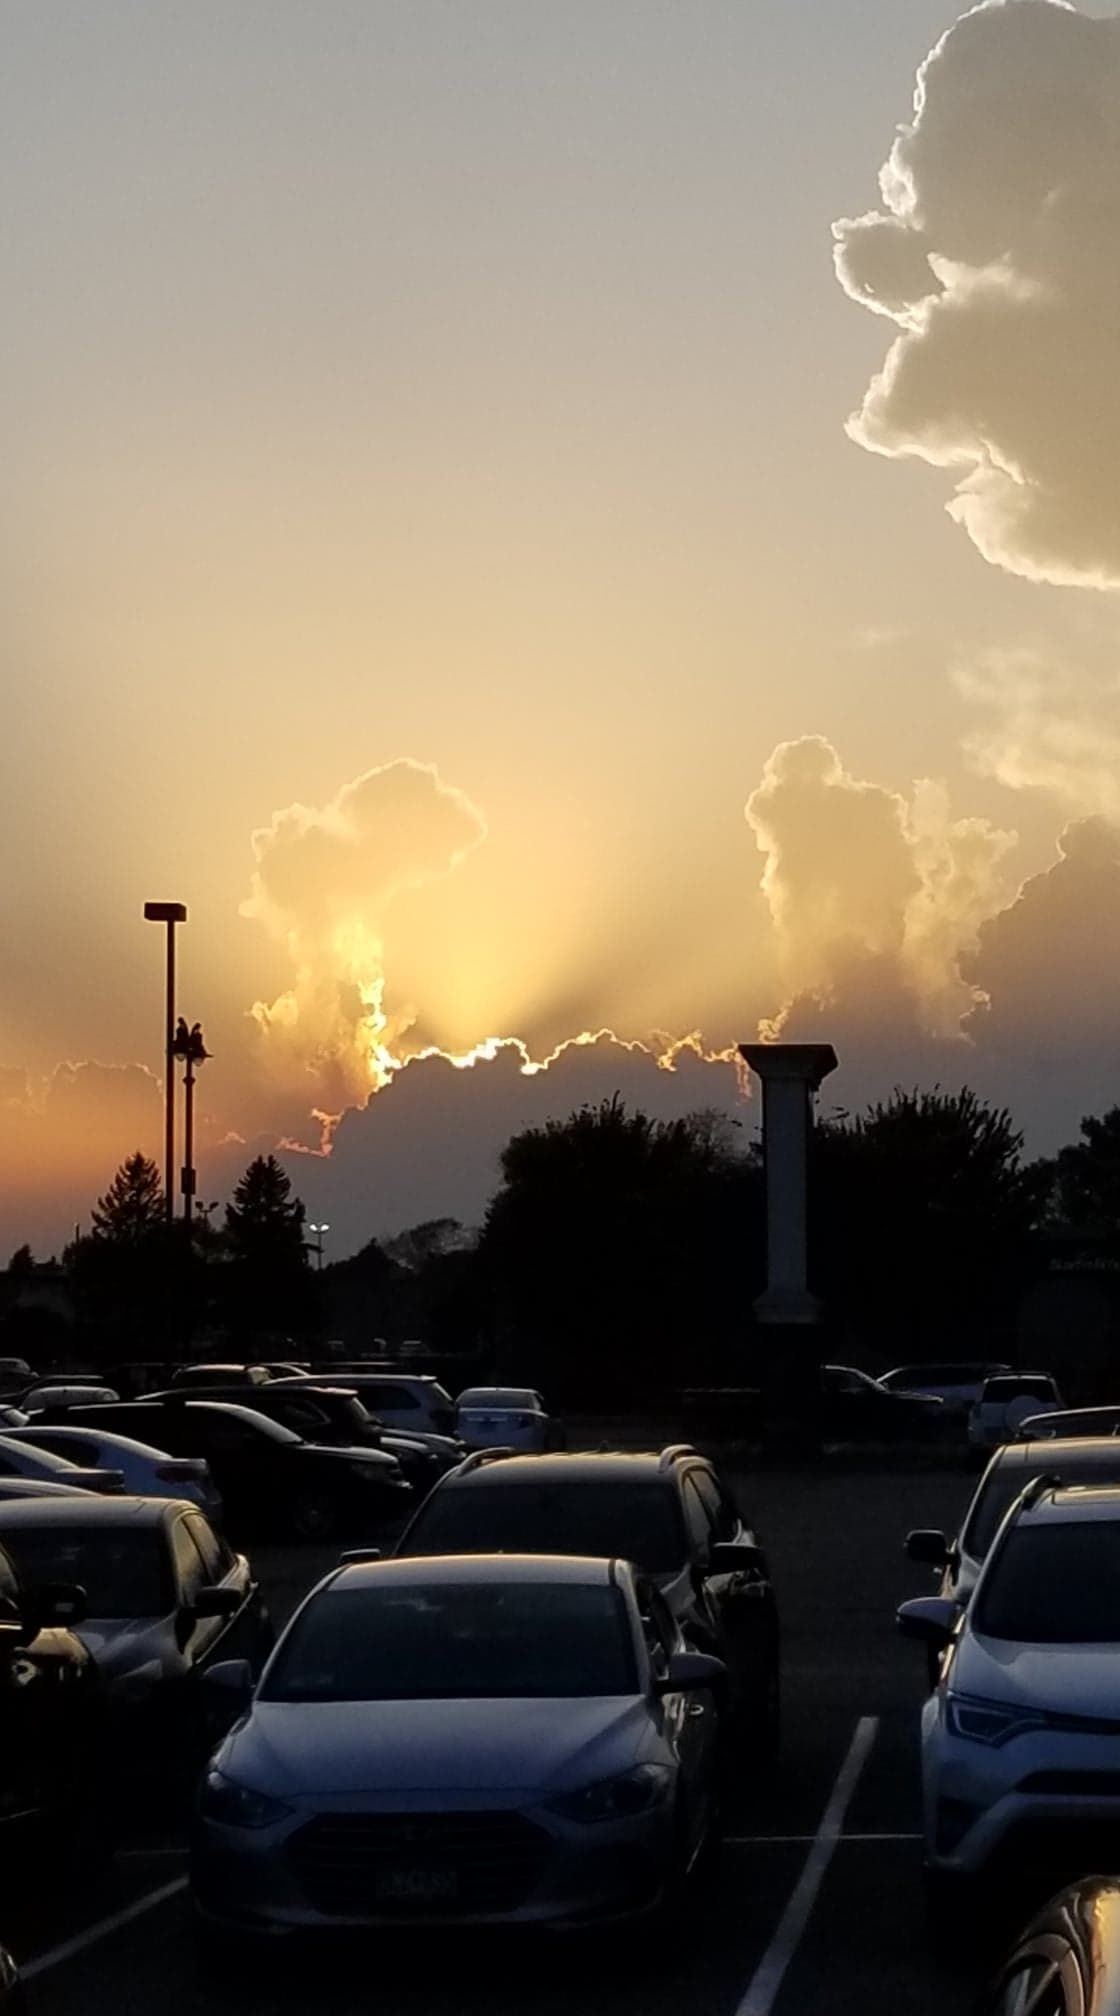 This Homer Simpson cloud...